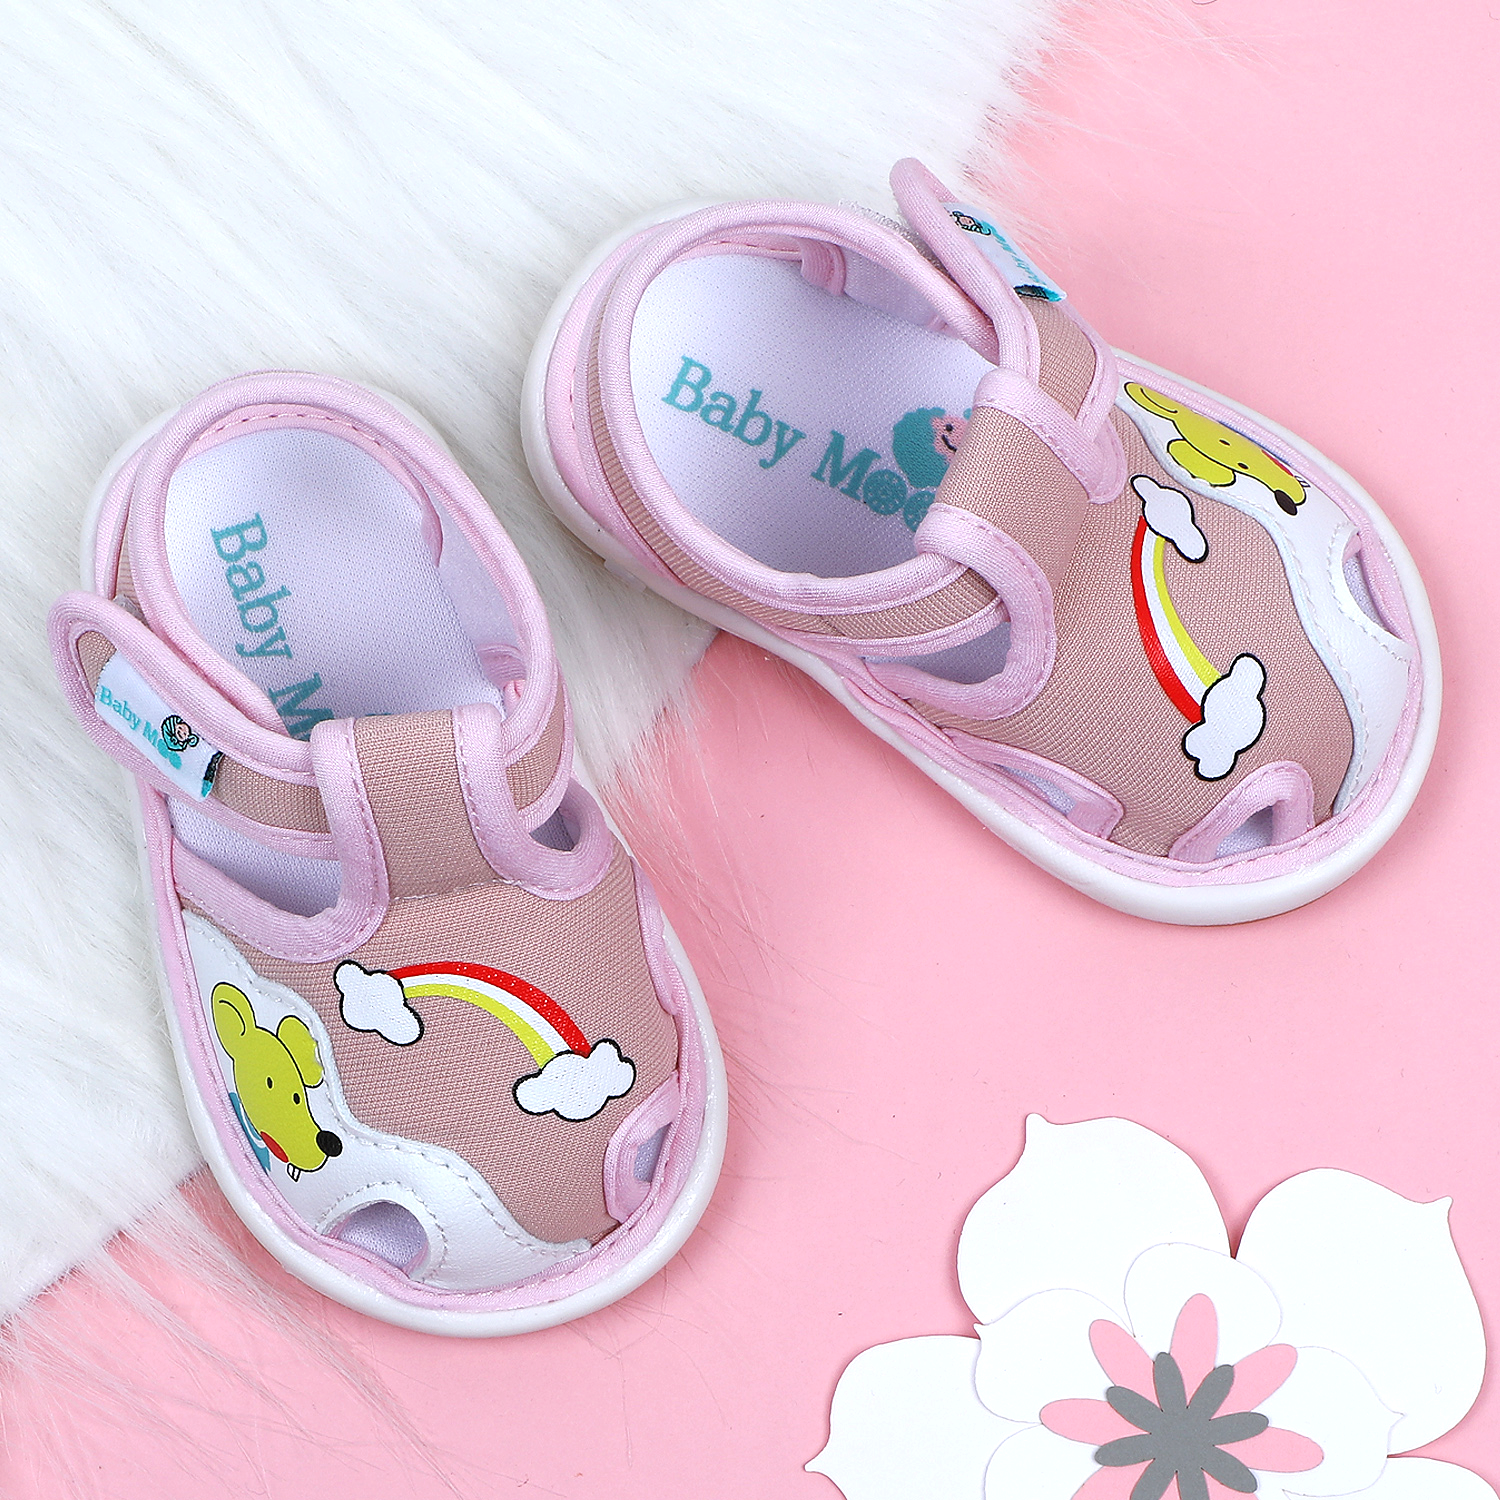 Baby Moo Rainbow Chu-Chu Sound Breathable Anti-Skid Sandals - Pink